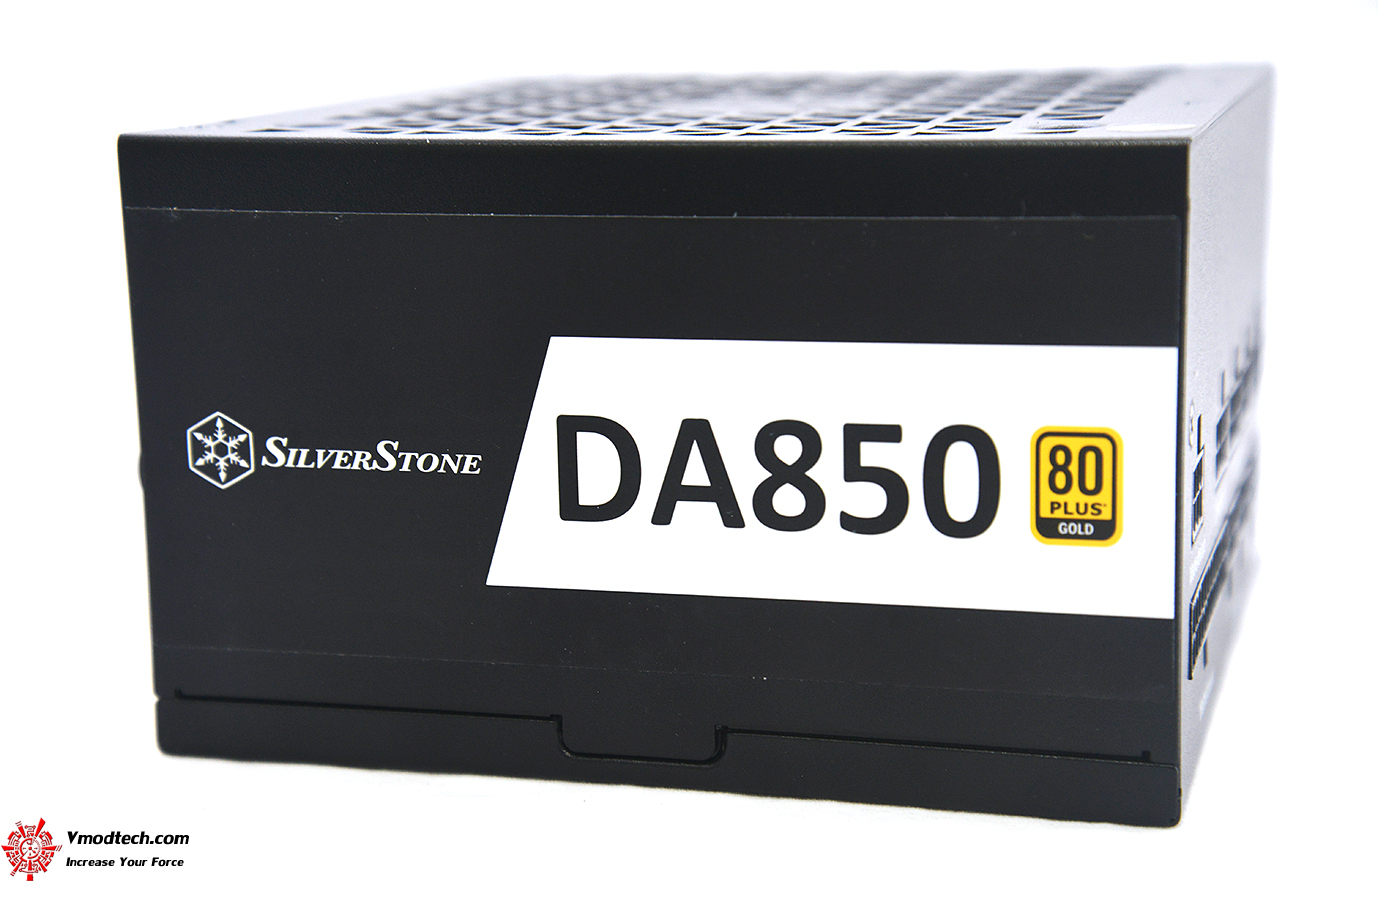 dsc 6615 SilverStone DA850 Gold Review